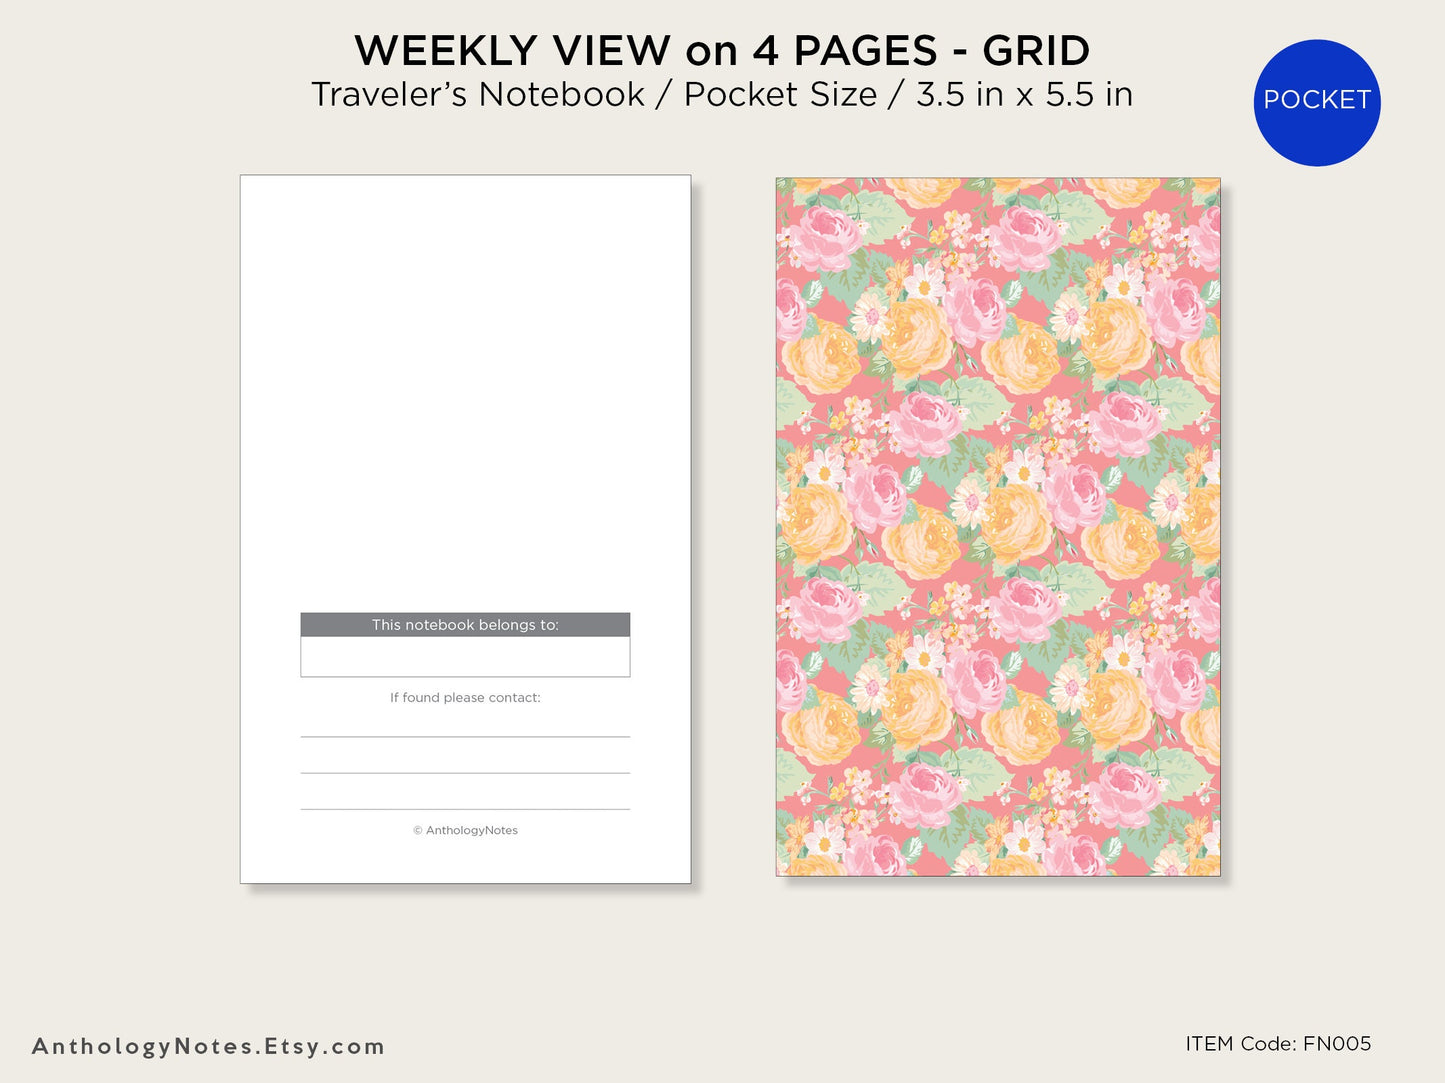 POCKET TN Weekly Planner Printable Insert Wo4P GRID Horizontal Week on 4 Pages Undated, Minimalist, Functional